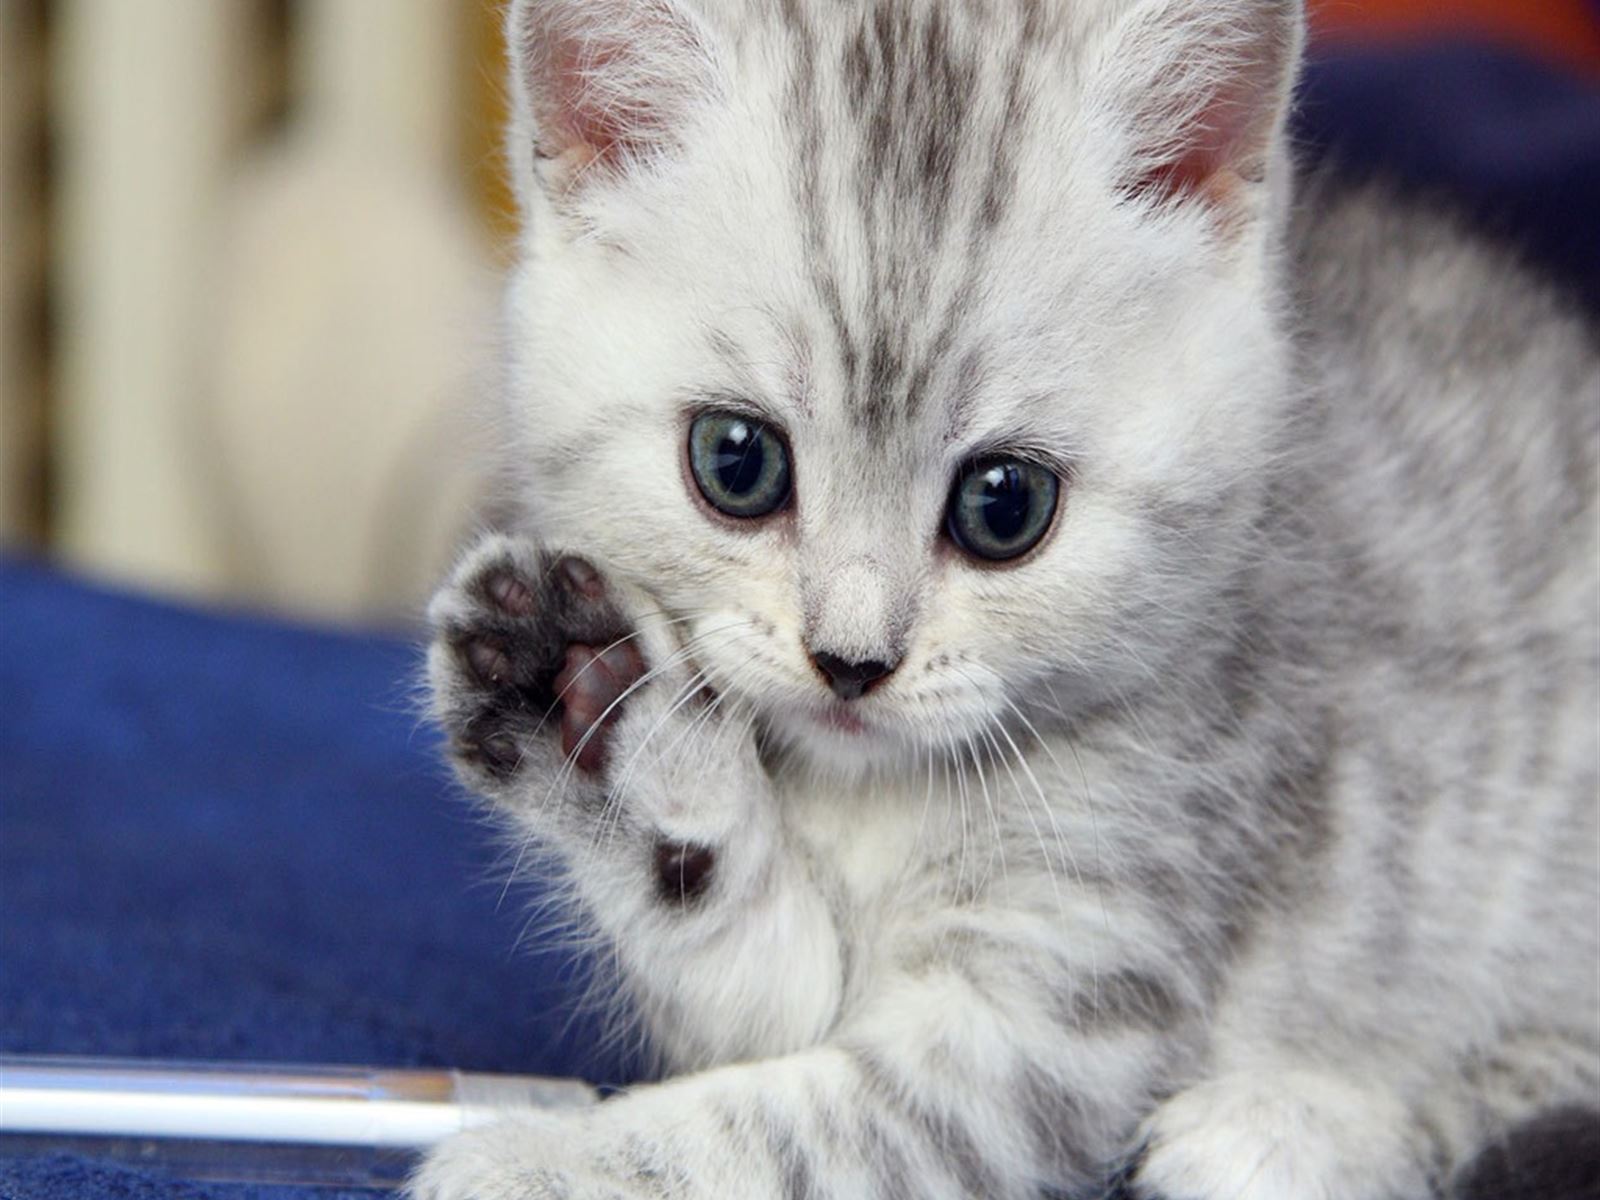 Cat Kitten iPad Wallpapers Free Download